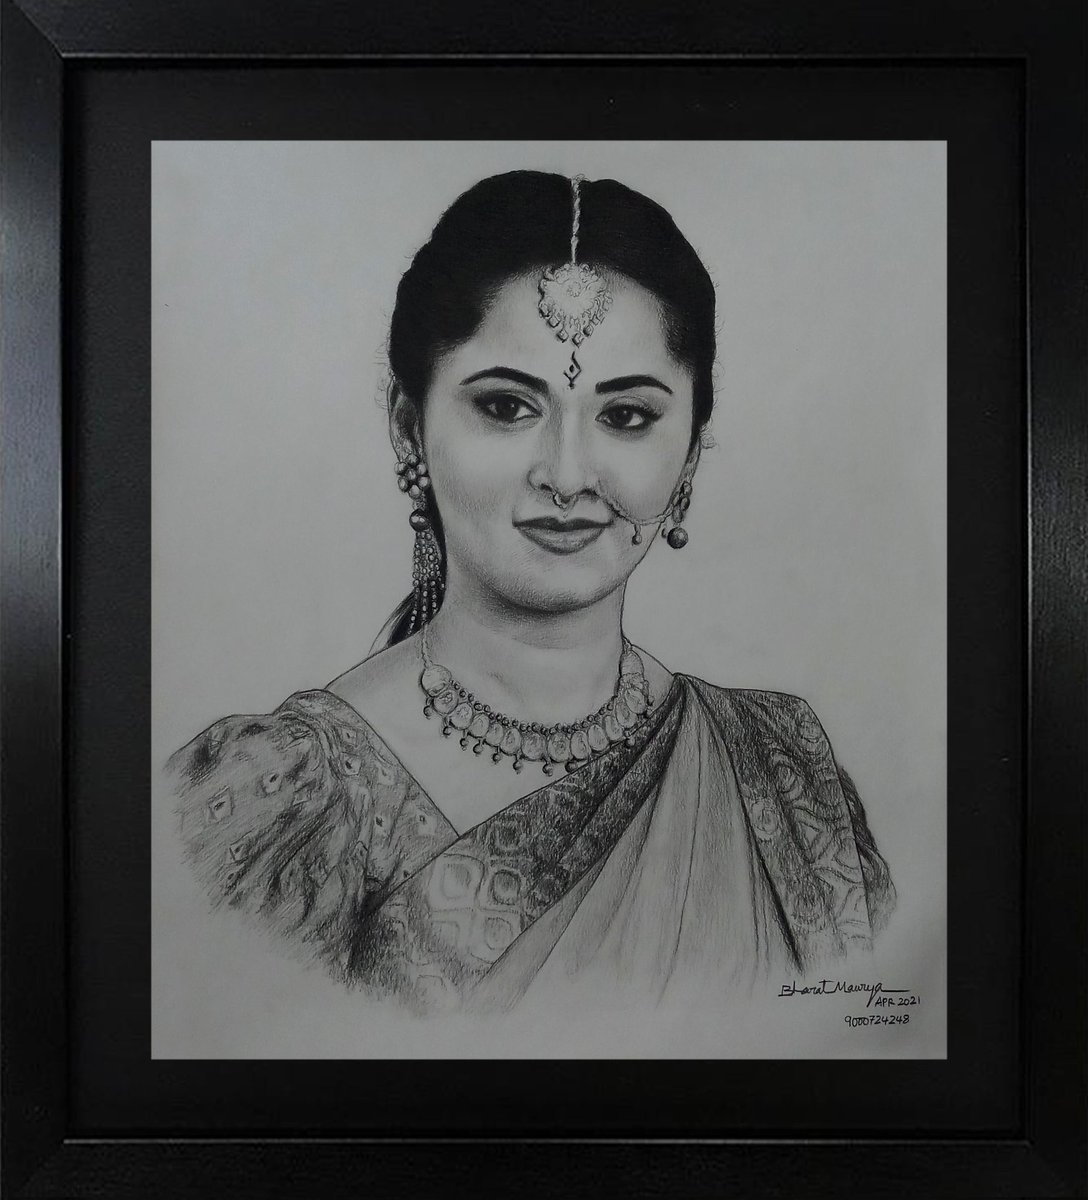 Pencil sketch of Miss  Anushka Shetty,  

#bharatmaurya #mauryafinearts 
#naturalintelligenceart #NIart 

#anushka #anushkashetty #teluguheroine #tollywood #arundhati #baahubali2 #vikramarkudu #pencilportrait #traditionaldrawing  #hyderabadartist
#sketchfromphoto  #handmadeart